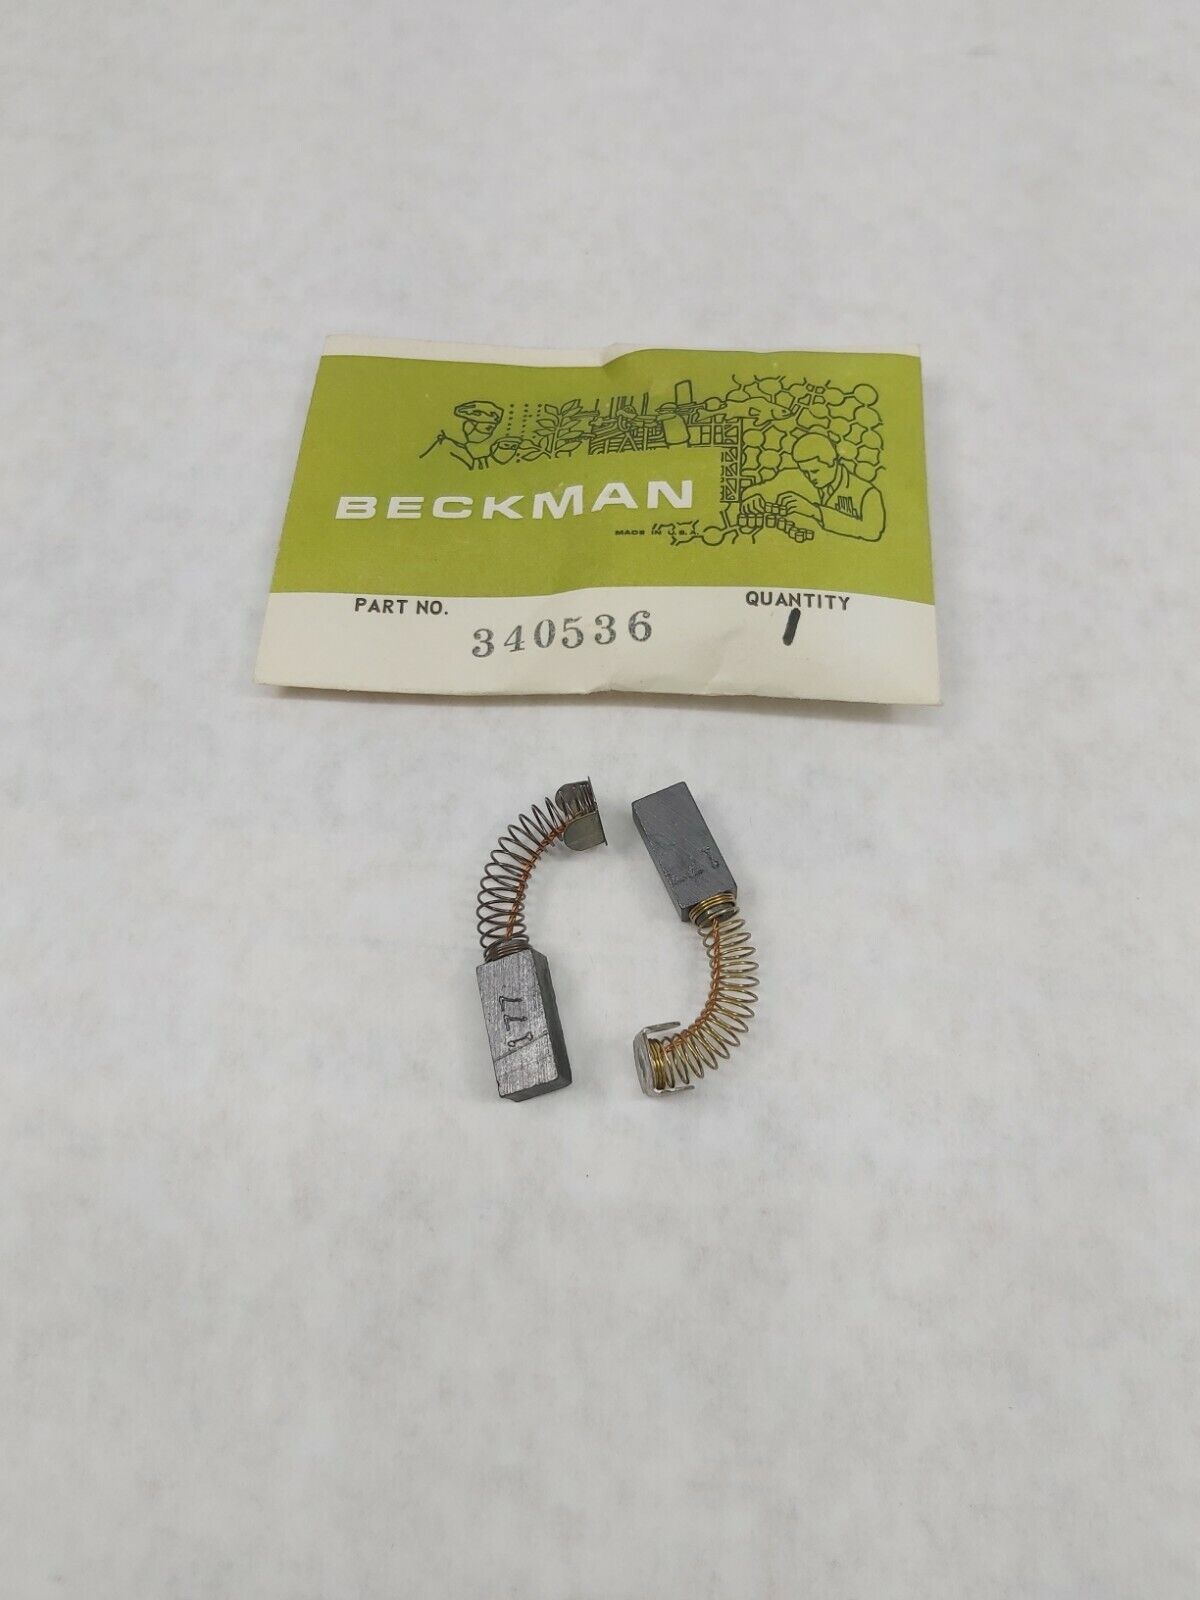 Beckman 340536 TJ-6 6R Brush Pair